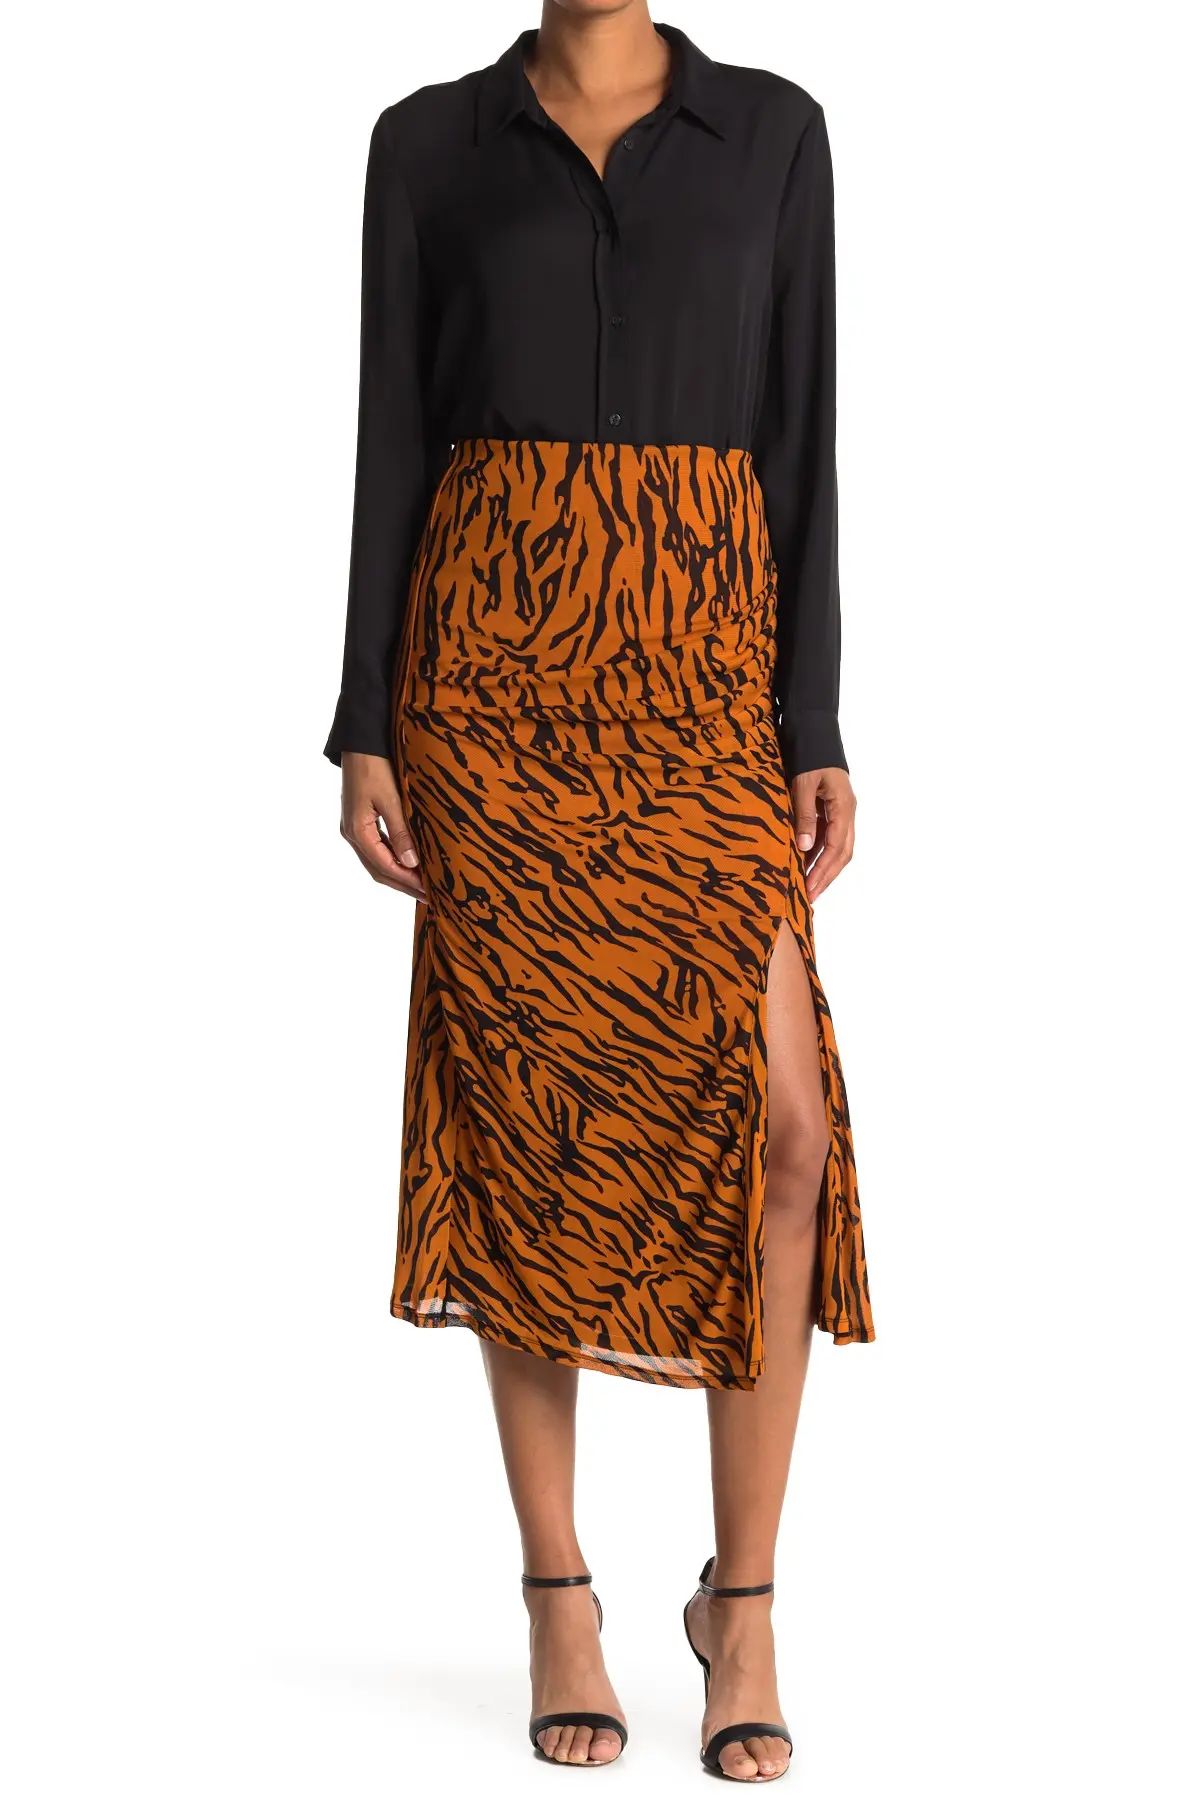 Diane von Furstenberg Edna Tiger Print Midi Skirt at Nordstrom Rack | Nordstrom Rack